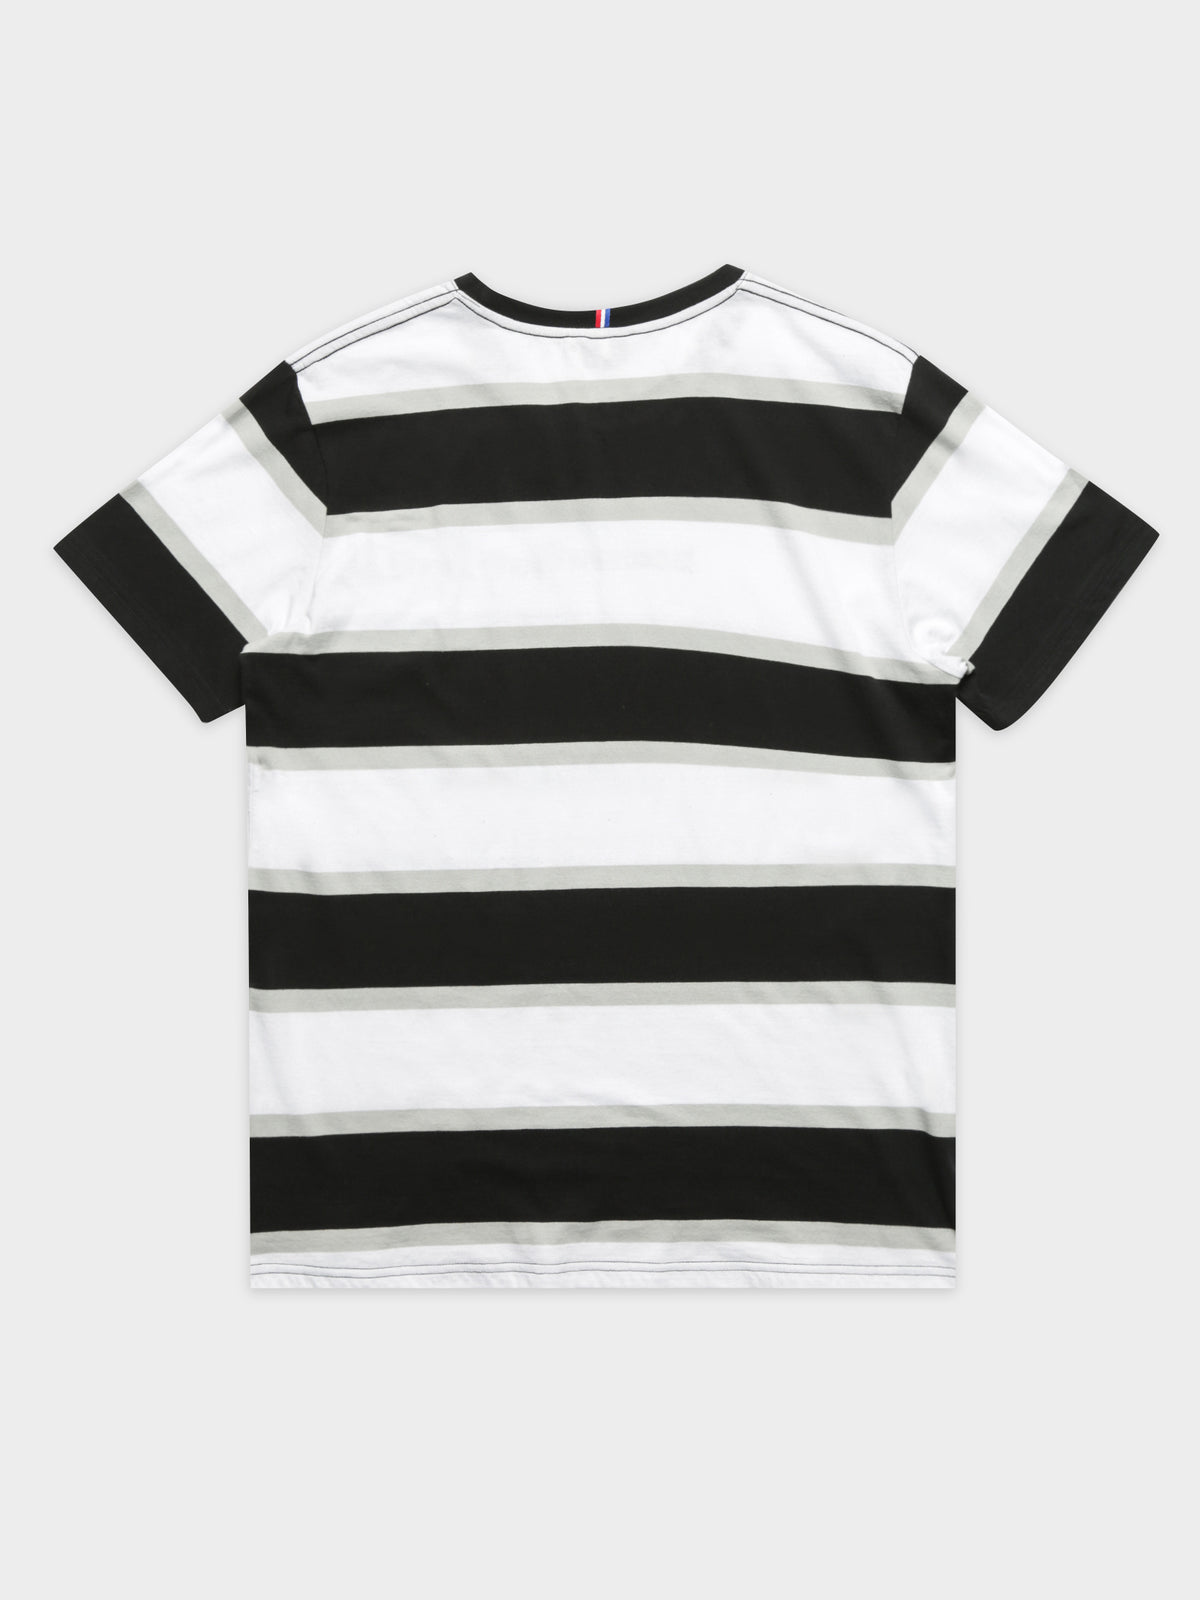 Cabot Stripe T-Shirt in Black Stripe